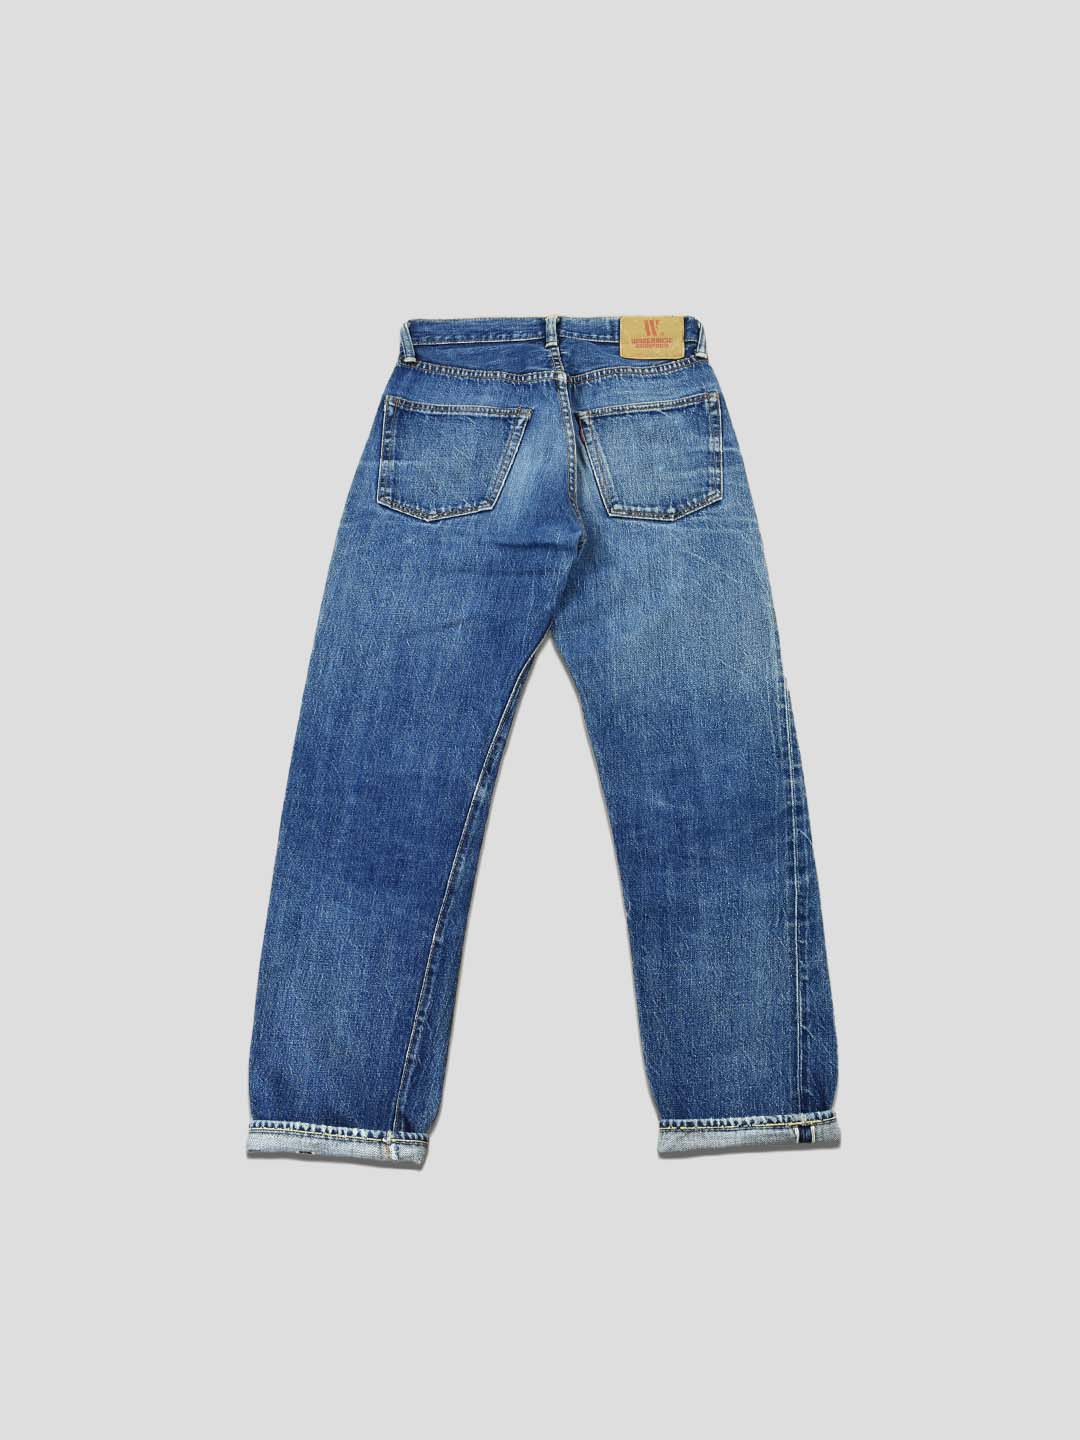 26] Warehouse 1100XX Selvedge Denim Jeans – Isami Lifestore